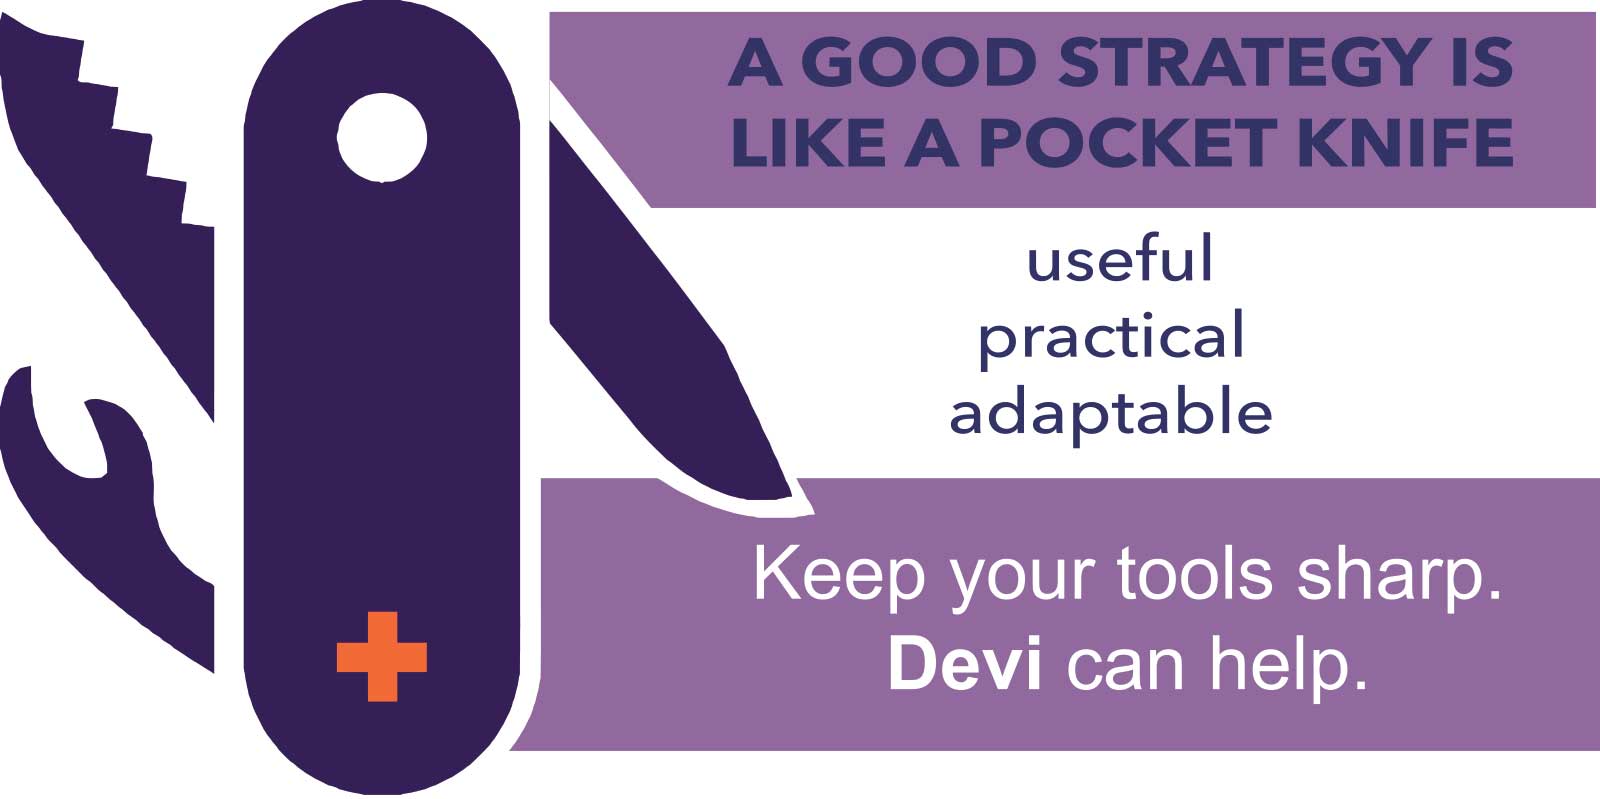 A good strategy is like a pocket knife. Keep your tools sharp. Devi can help